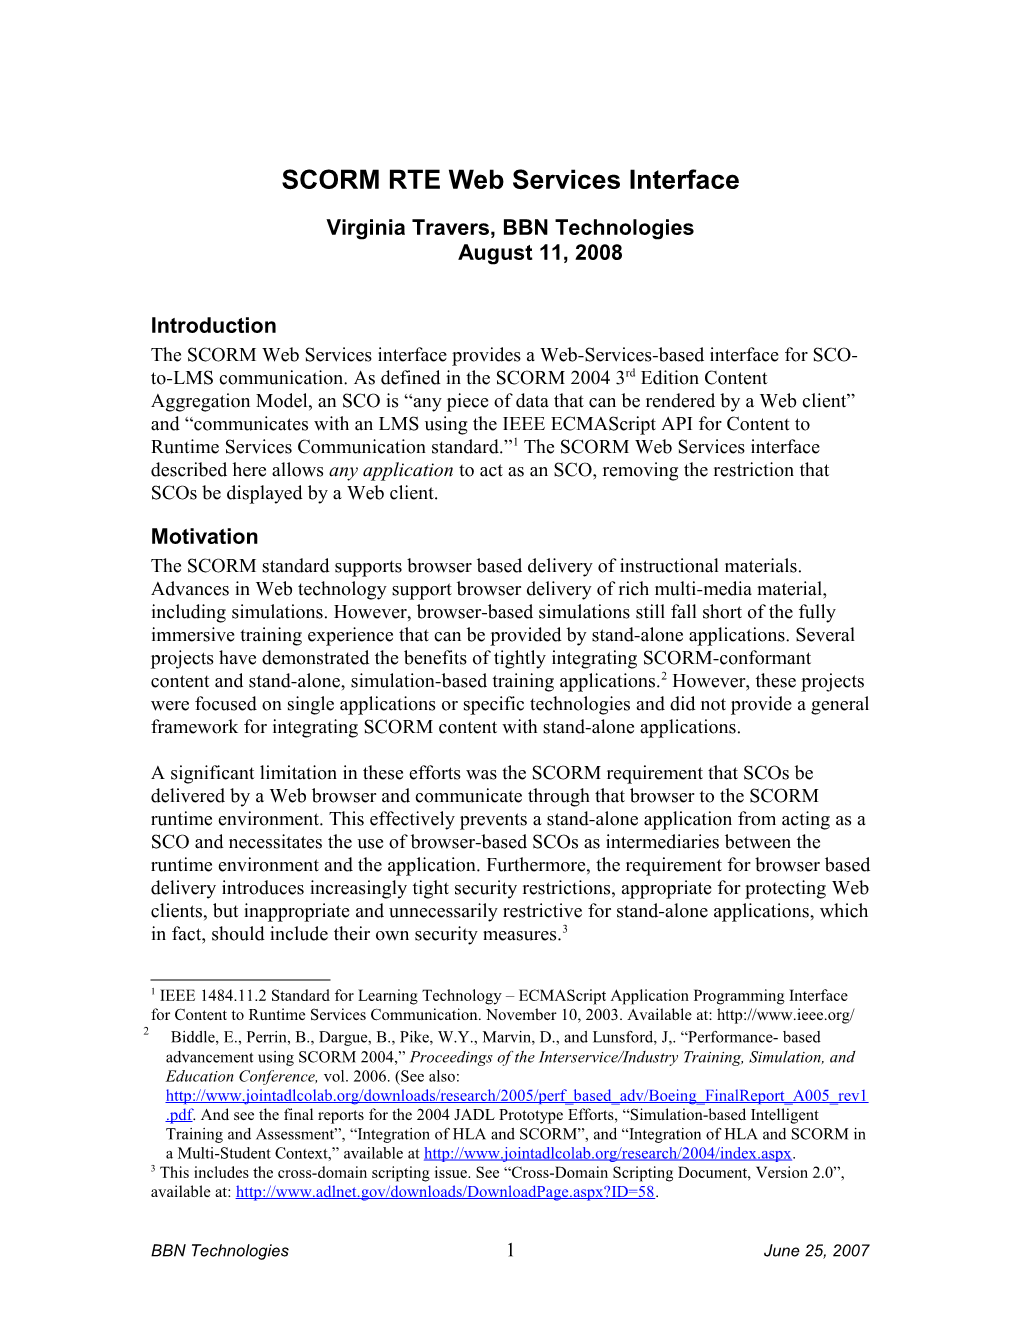 SCORM Web Services Interface